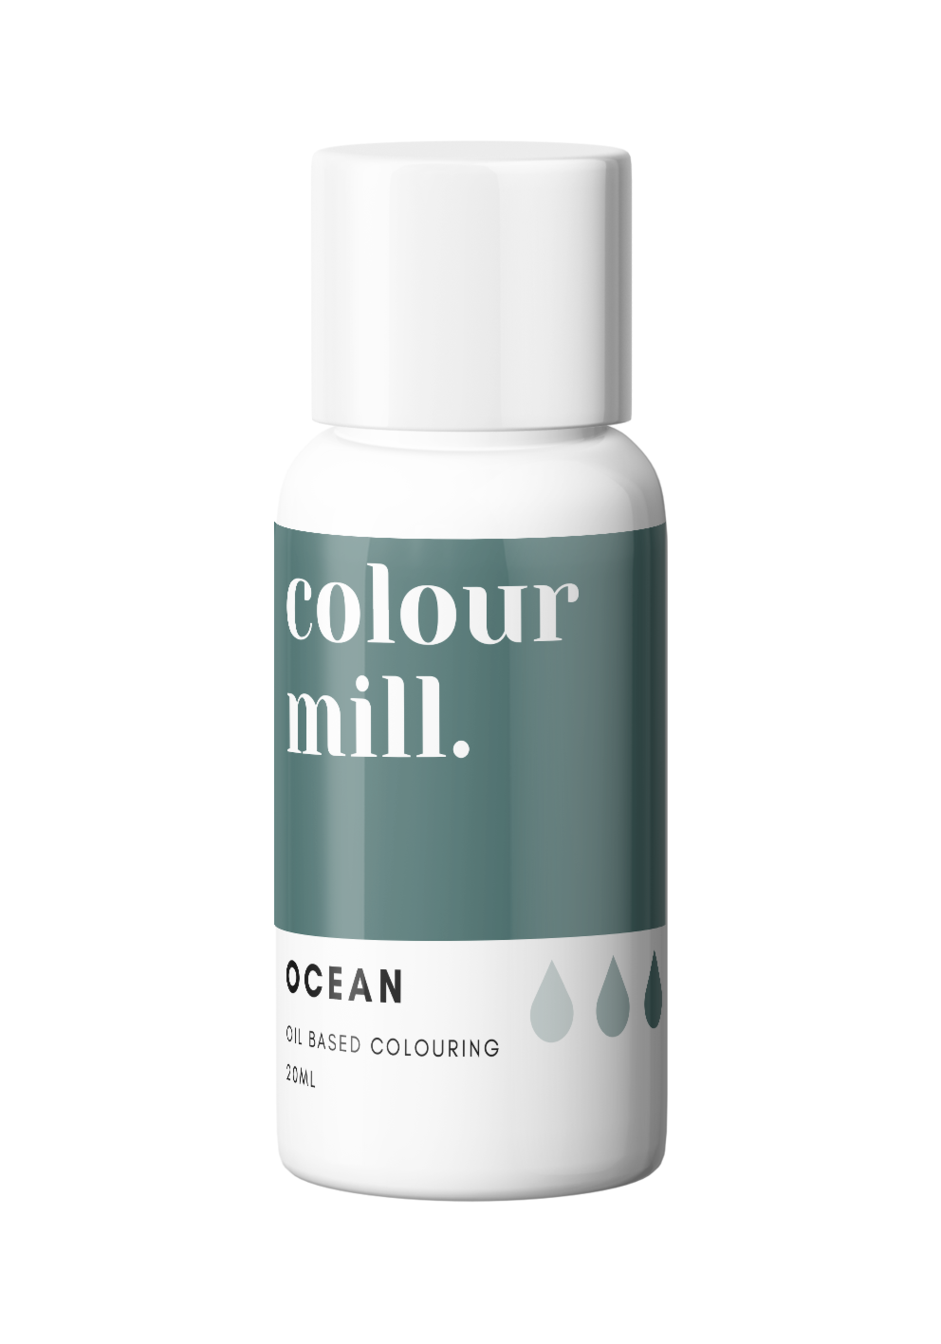 Ocean, 20ml, Colour Mill Oil Based Colouring